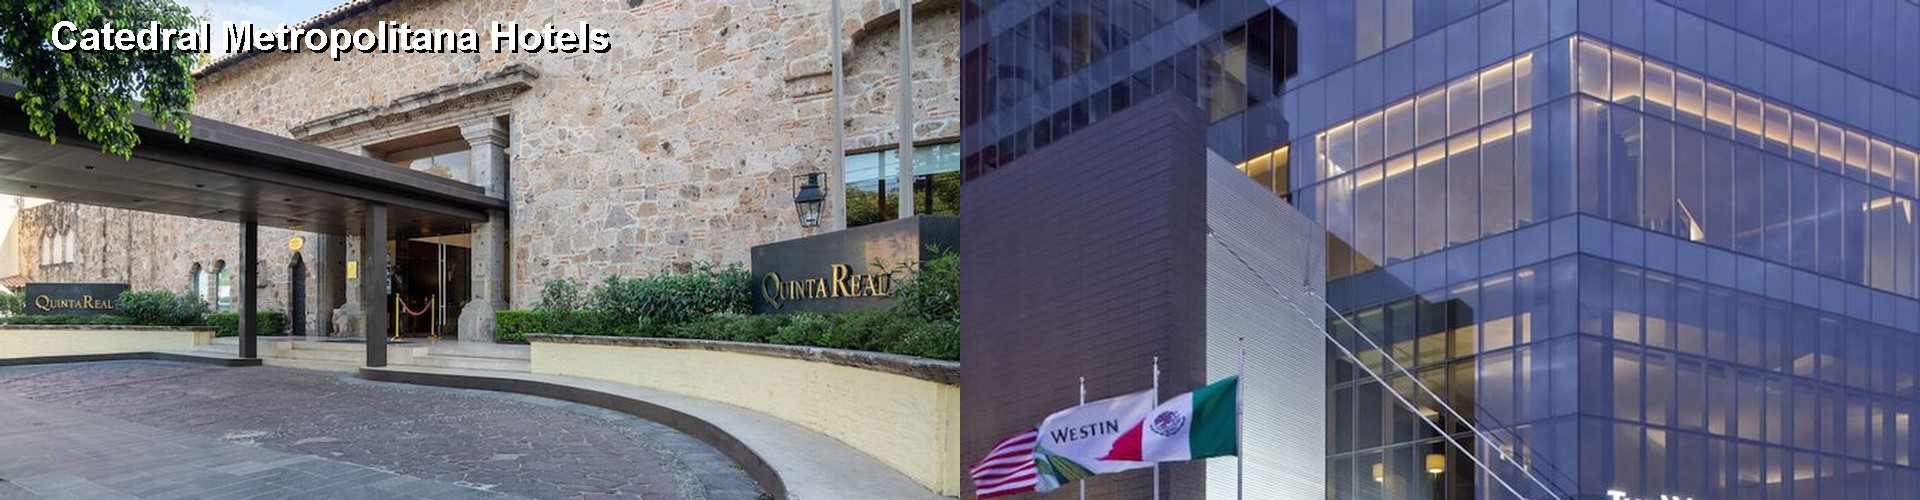 5 Best Hotels near Catedral Metropolitana